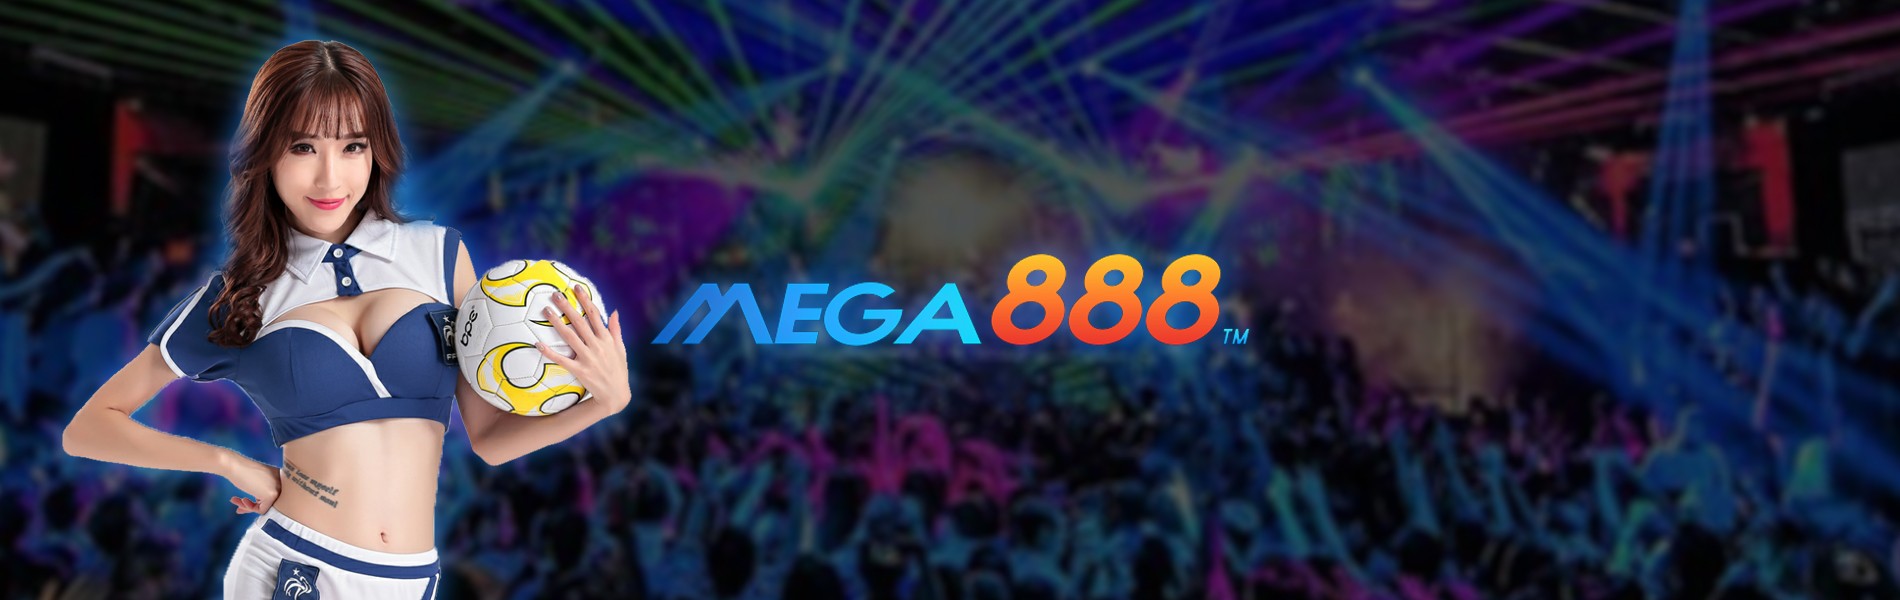 Unduh MEGA888 untuk iOS, Android dan Windows Indonesia